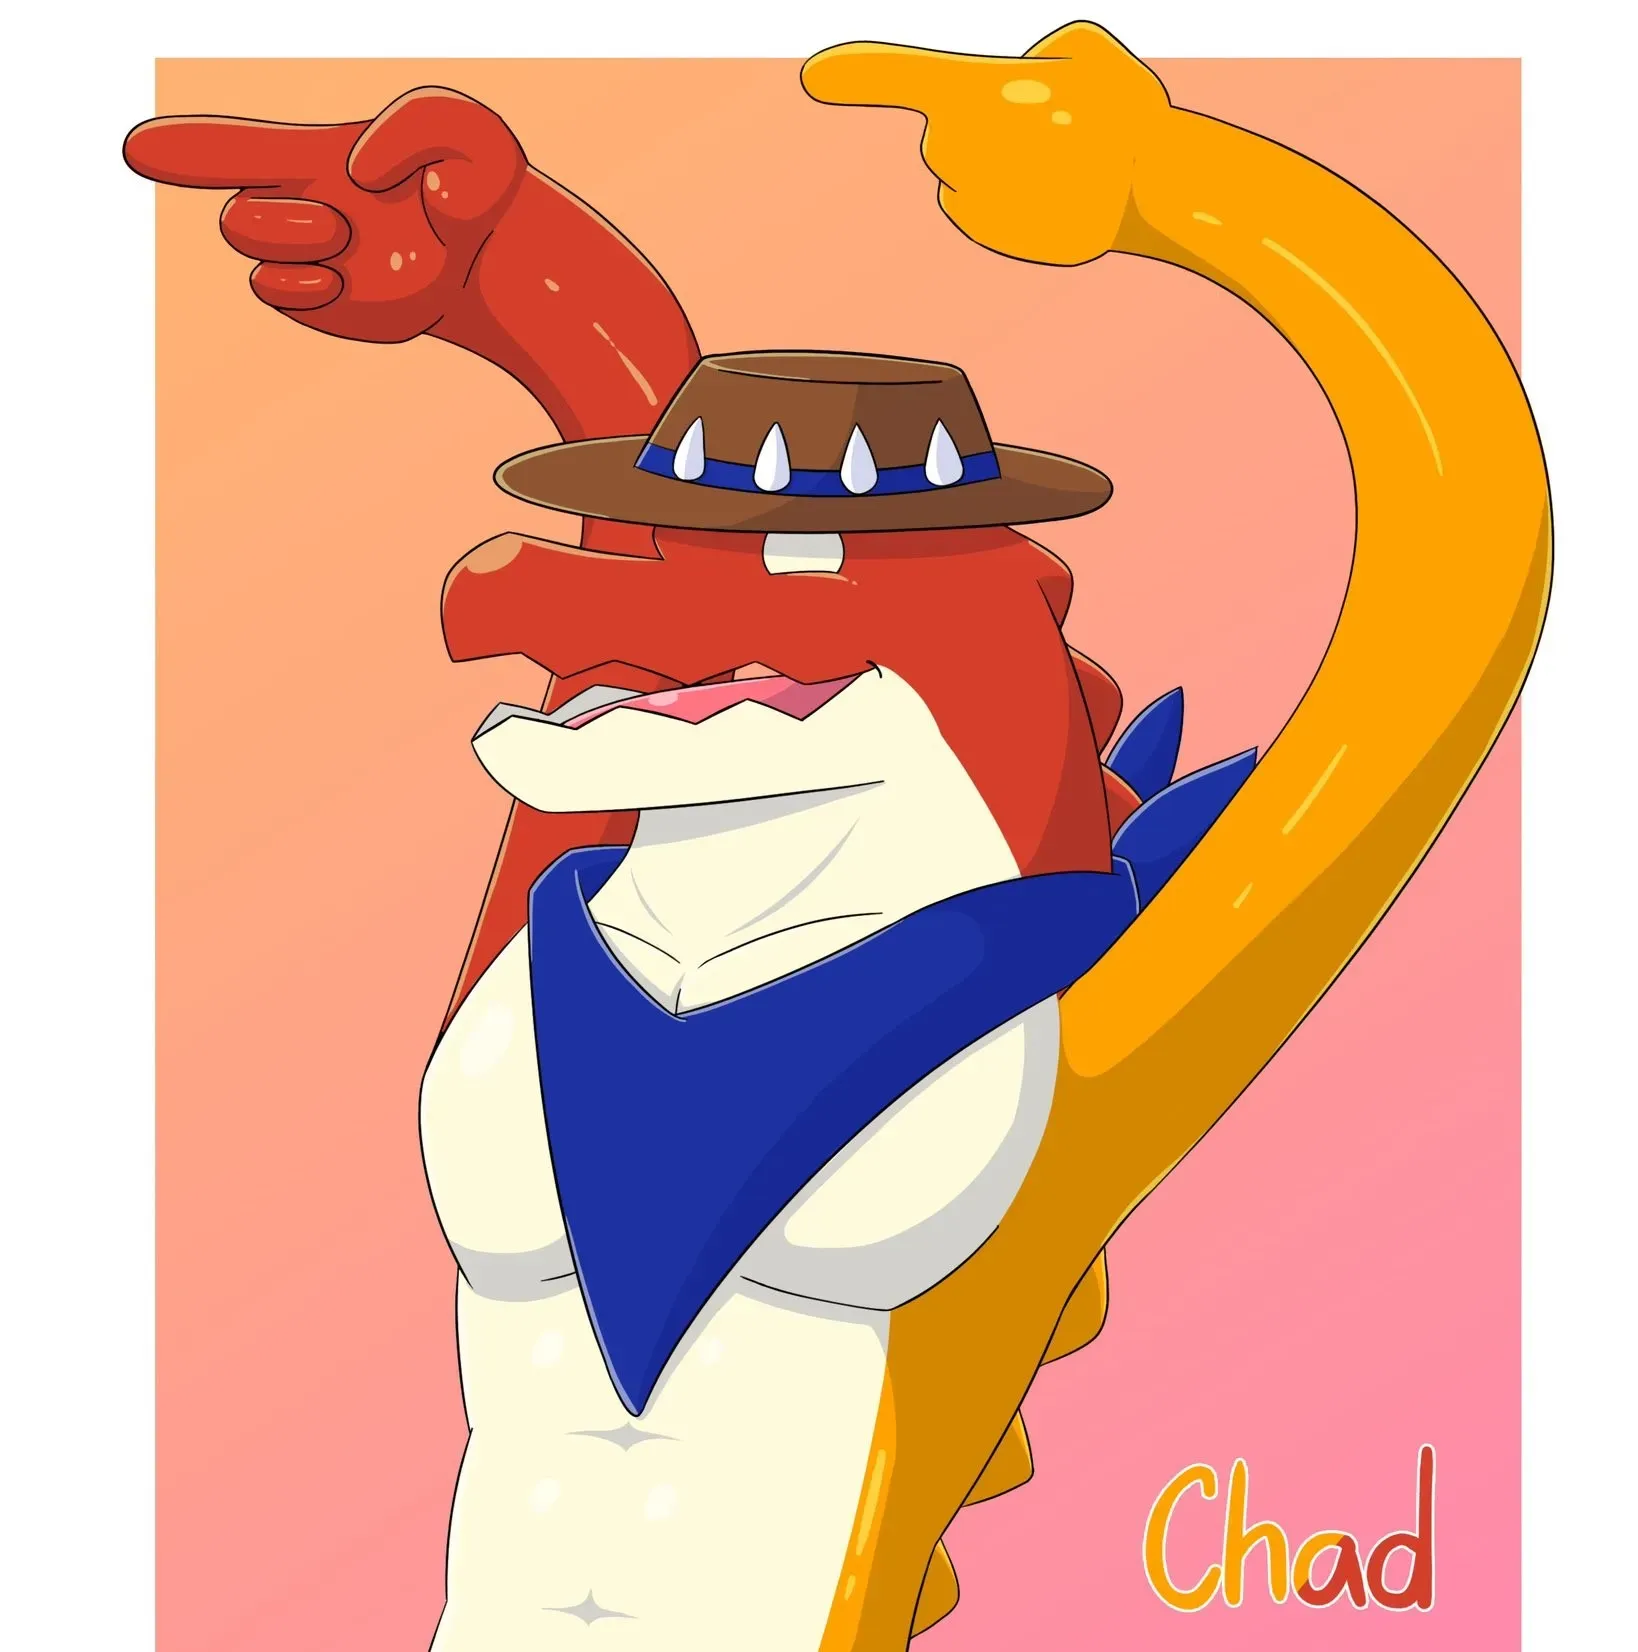 Avatar of Chad - TADC